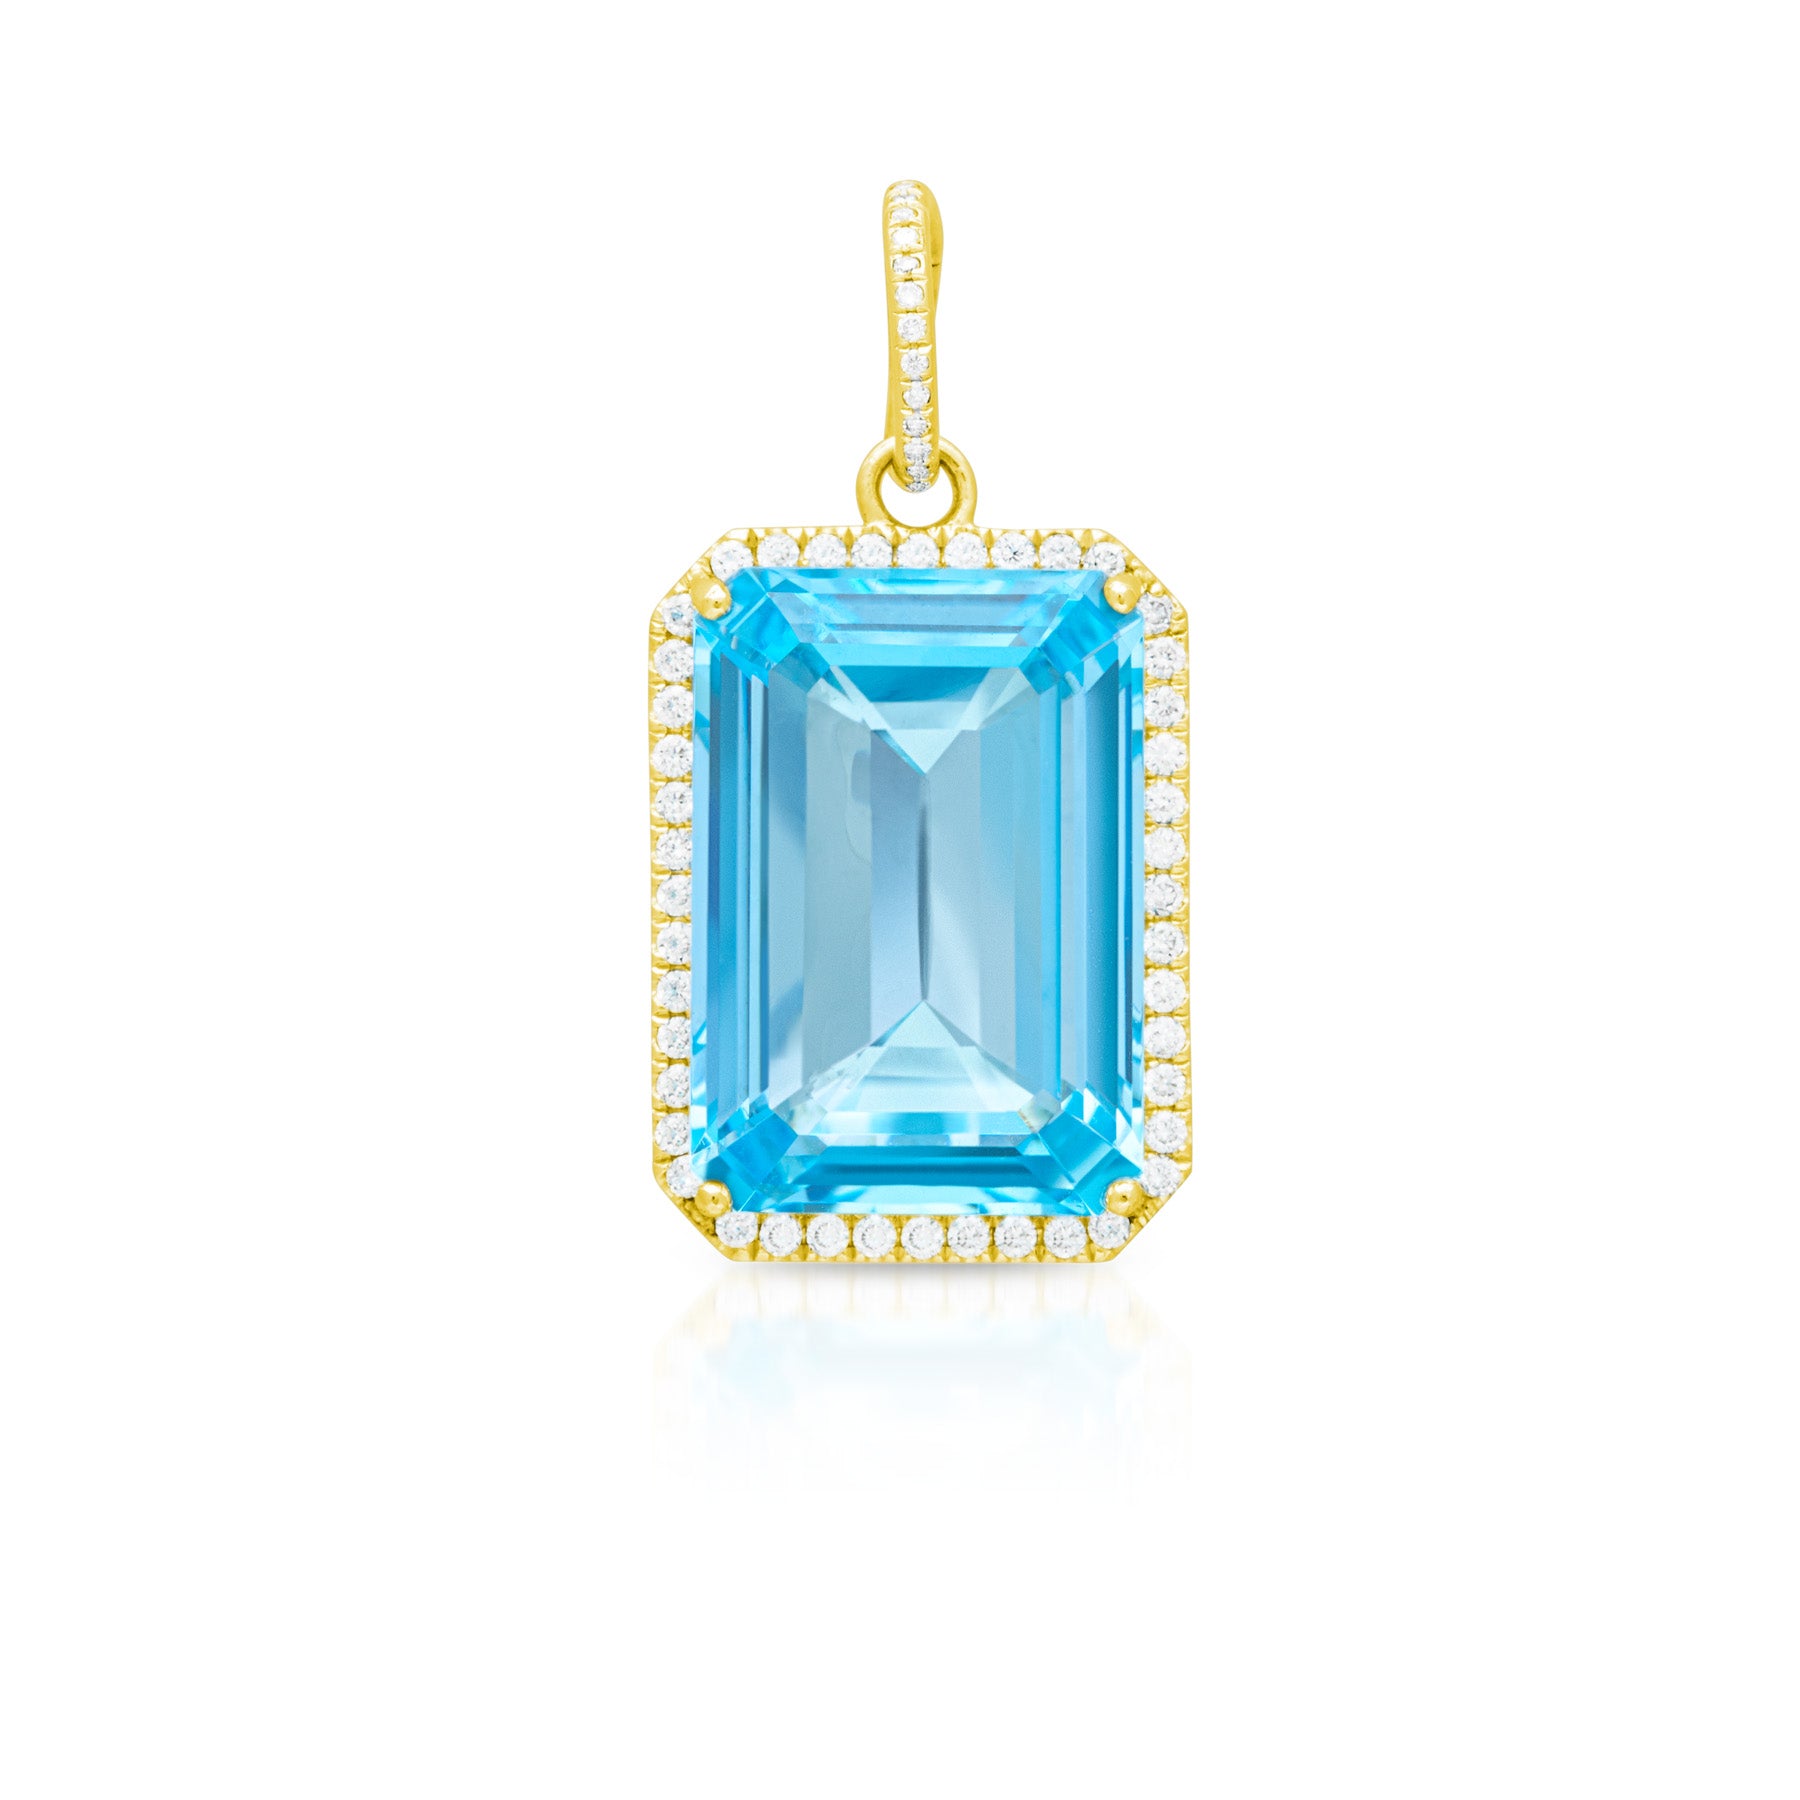 18KT Yellow Gold Diamond Blue Topaz Luxe Jolly Charm Pendant with Diamond Clip on Bail